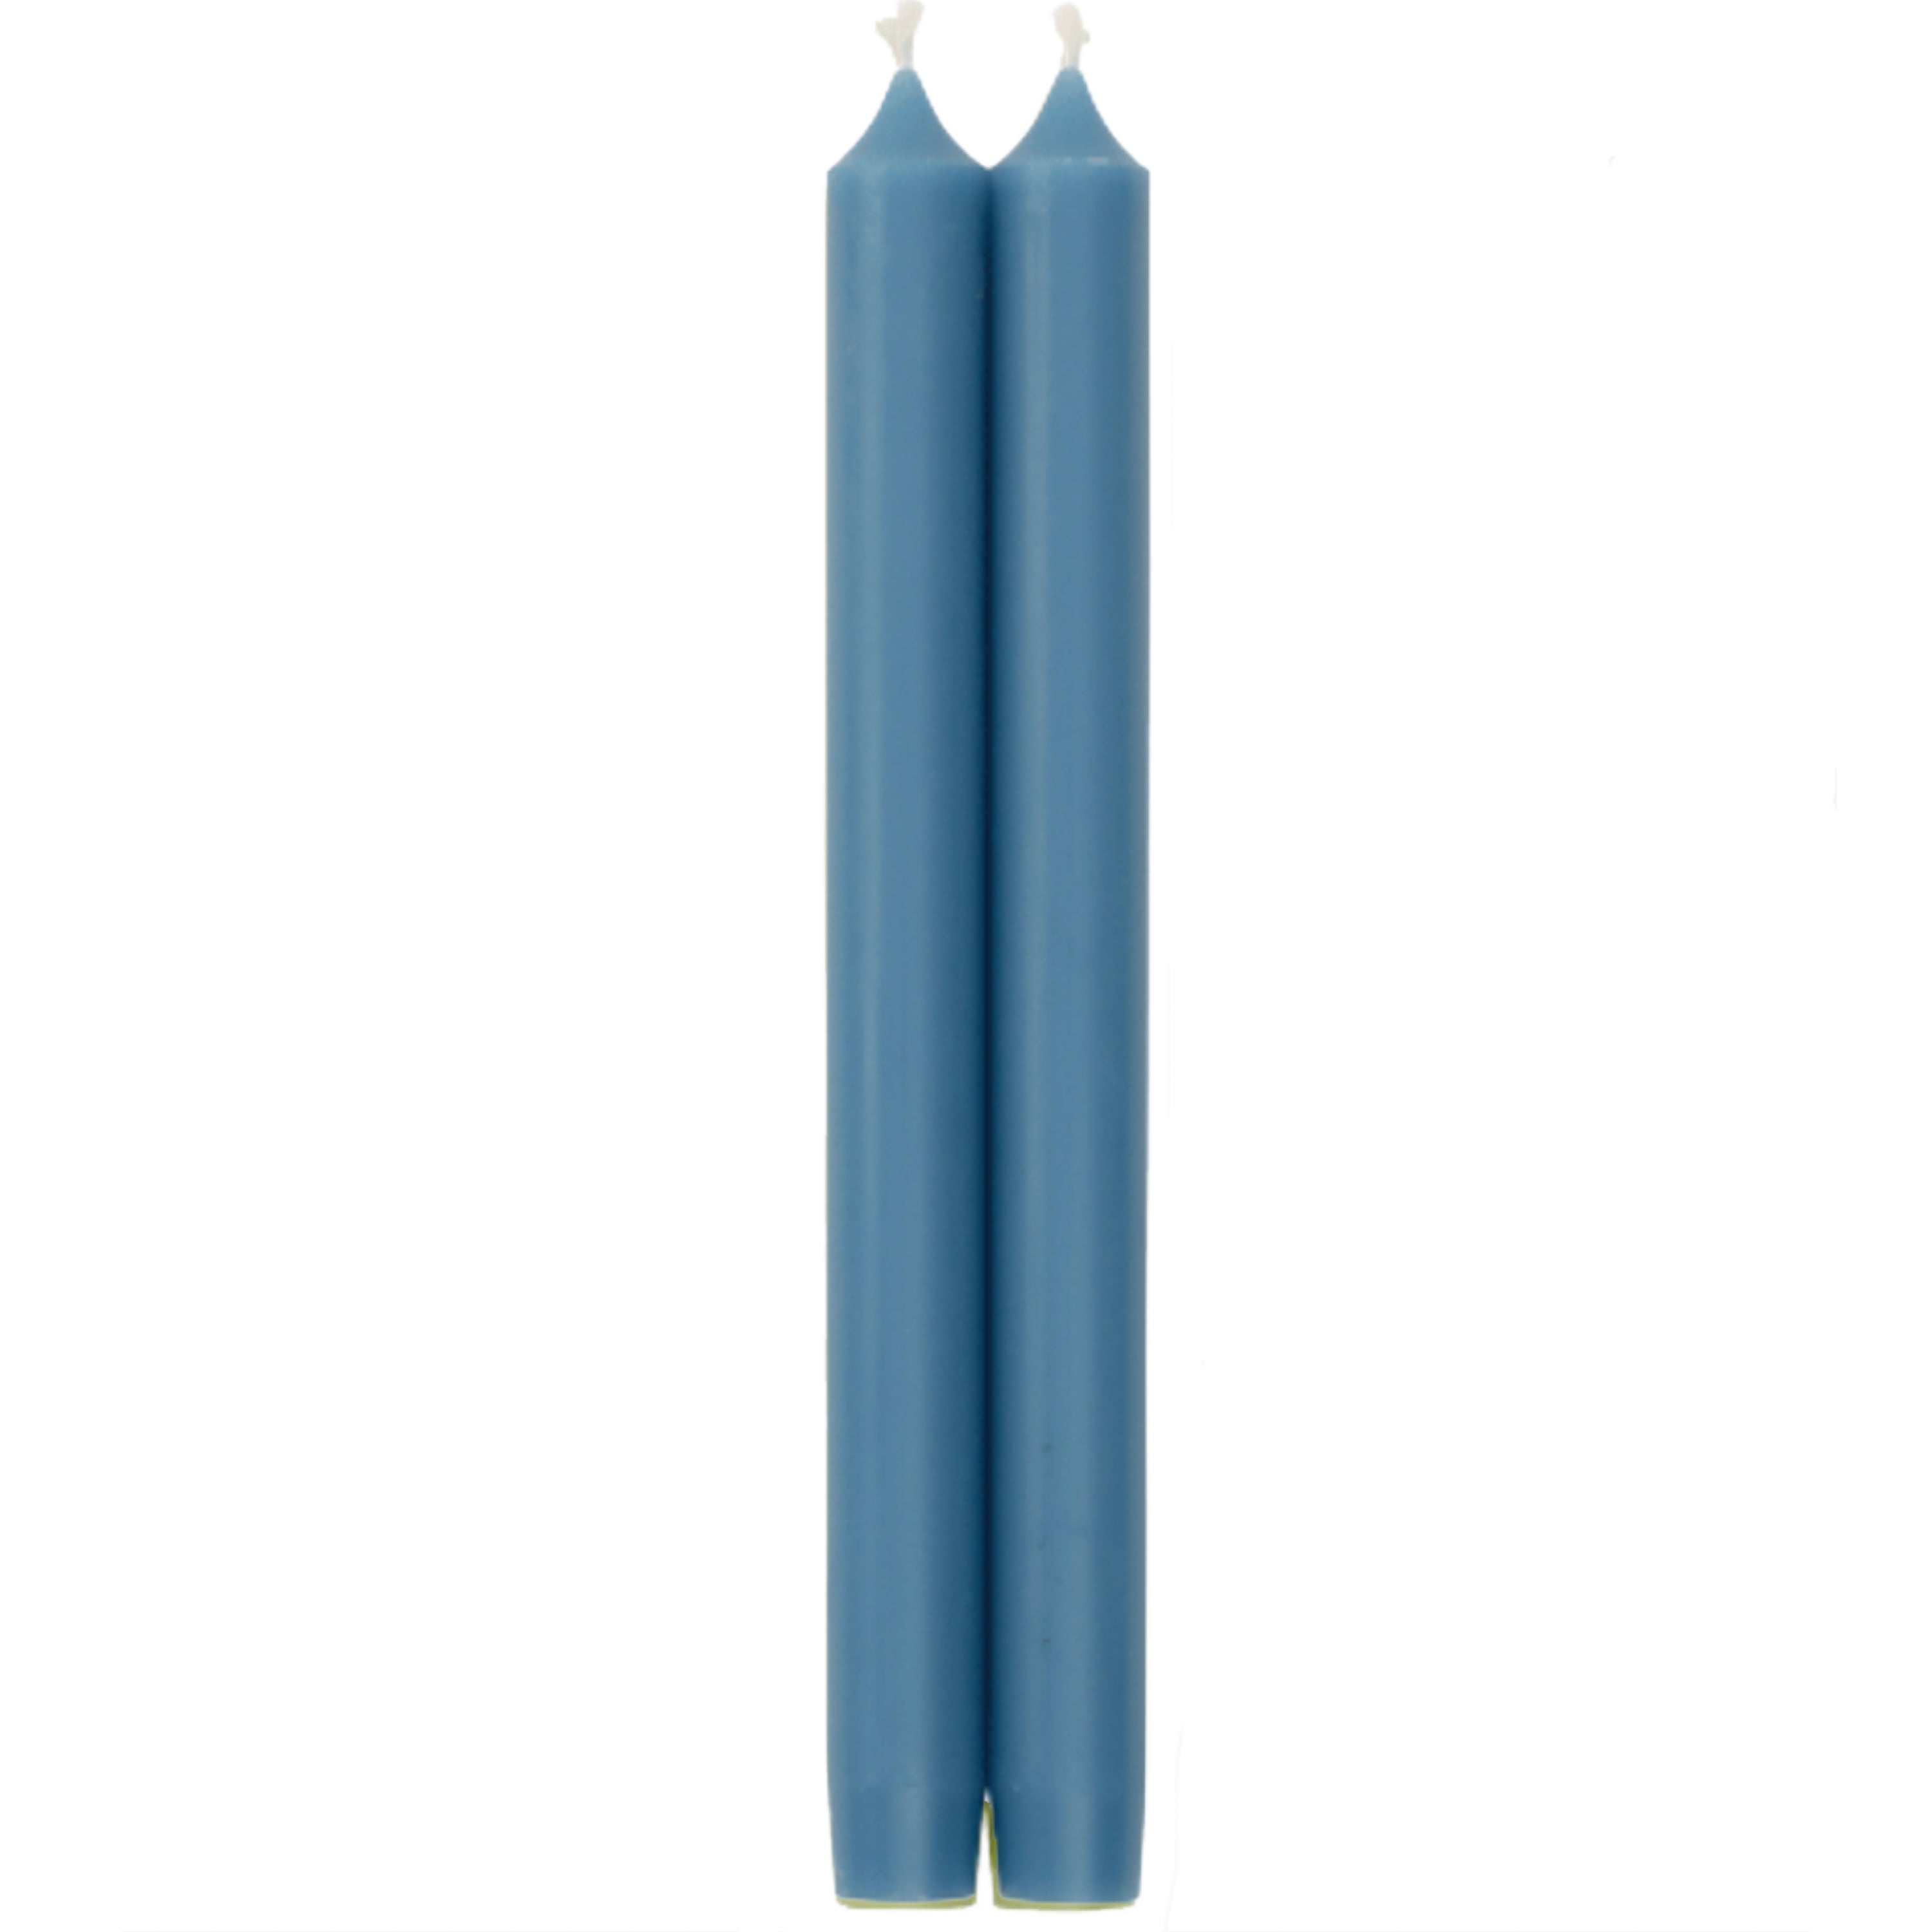 Caspari Tapered Candles in Parisian Blue – 12inch – 2pk